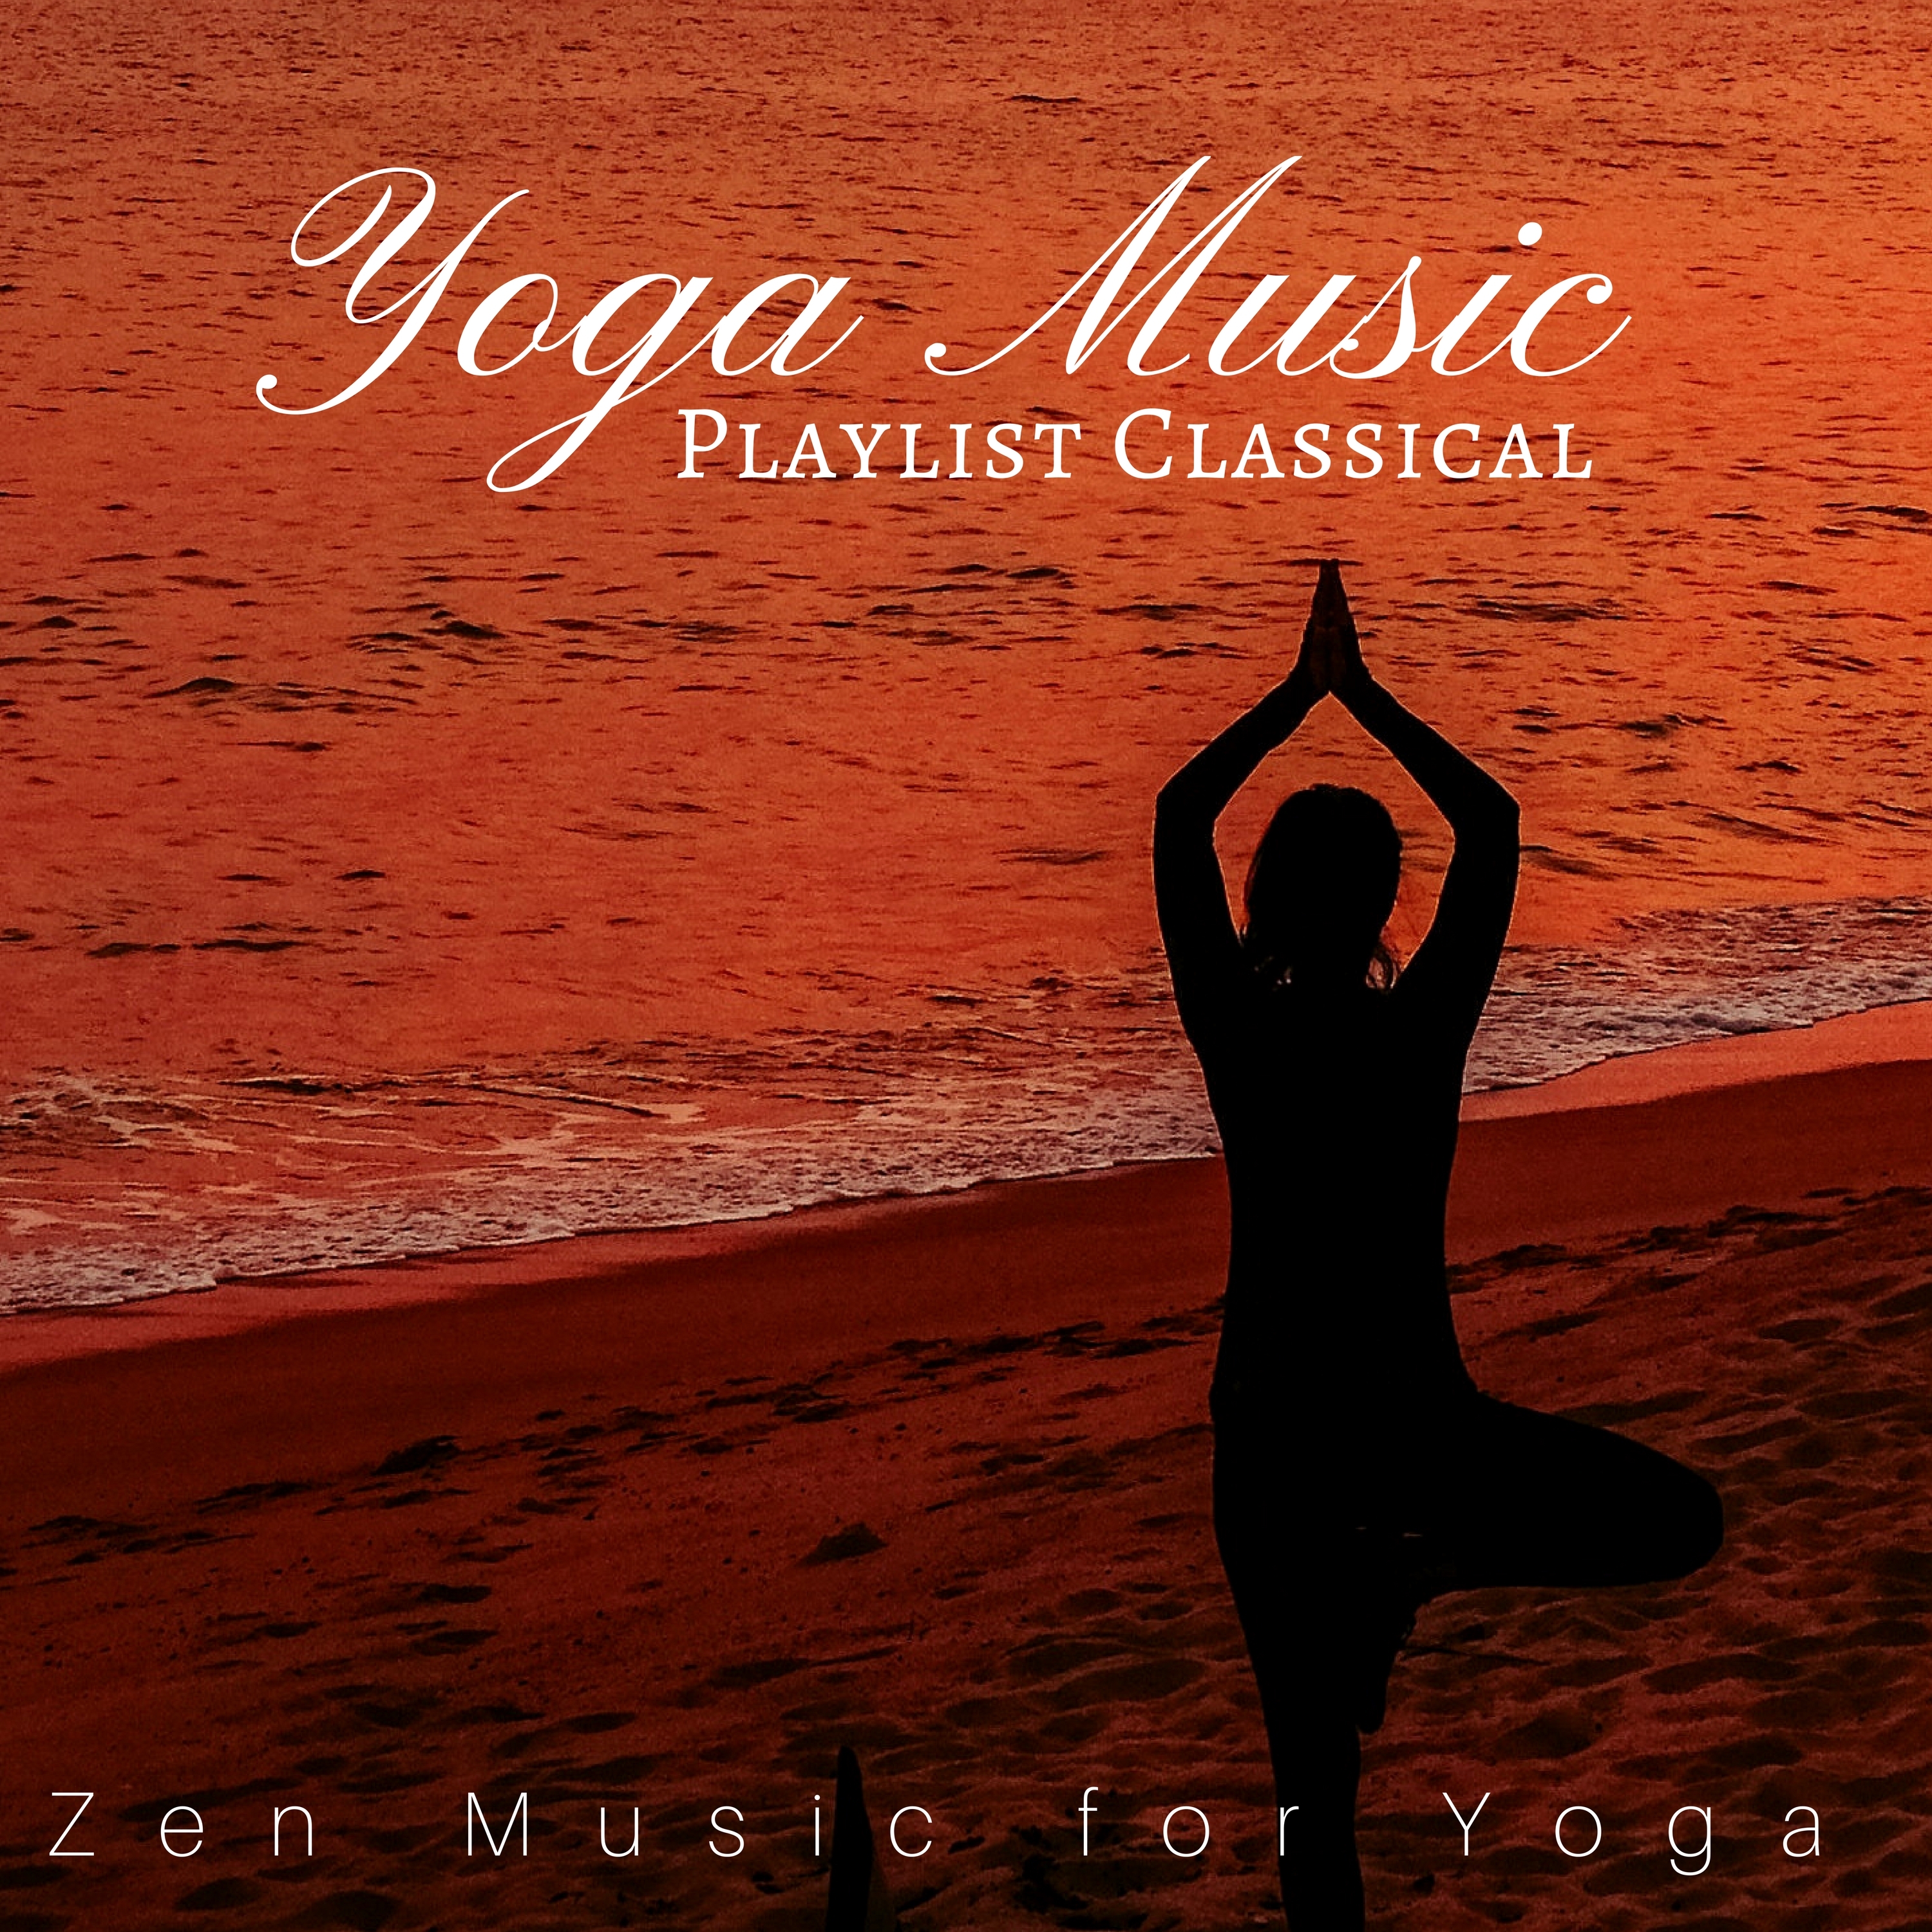 Yoga Music Playlist Classical: Zen Music for Yoga, Classical Piano, Meditation Classical Music